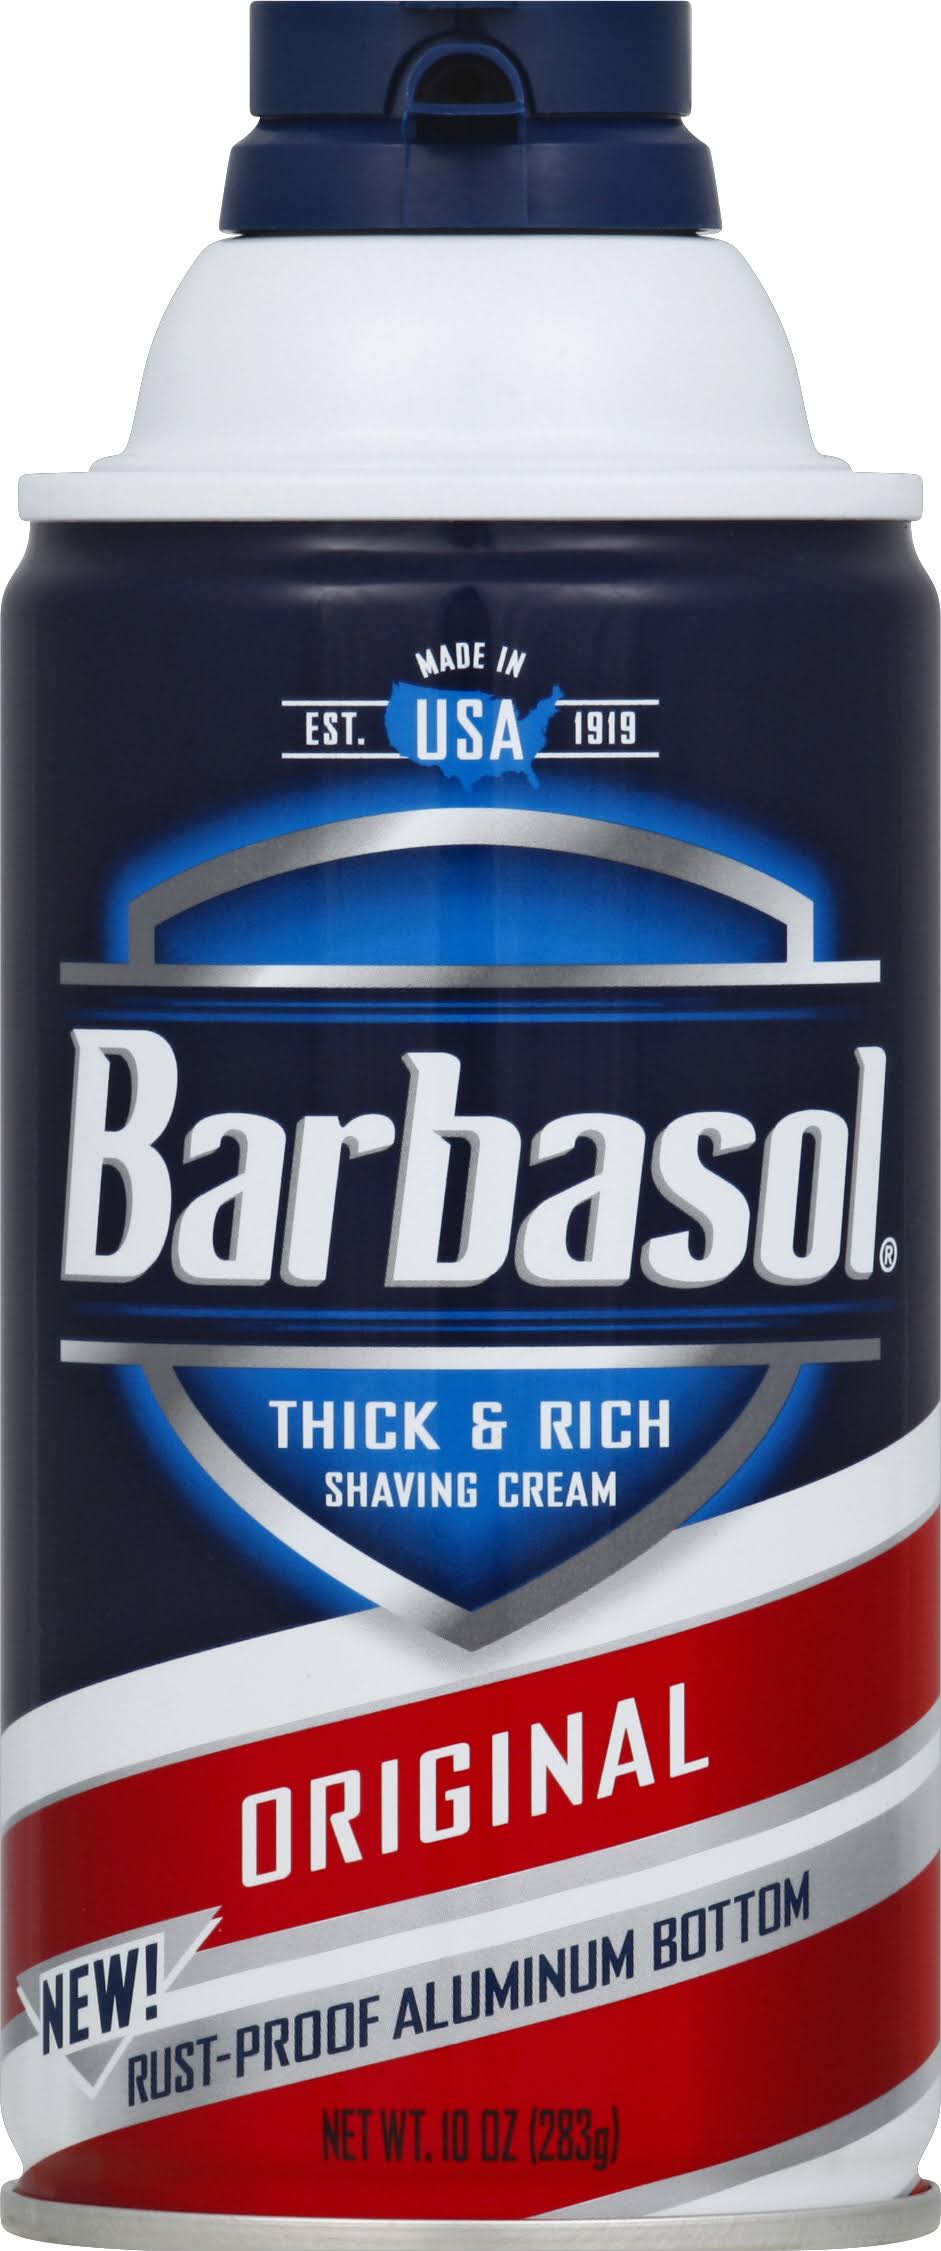 Barbasol Thick & Rich Shaving Cream - Original, 283g